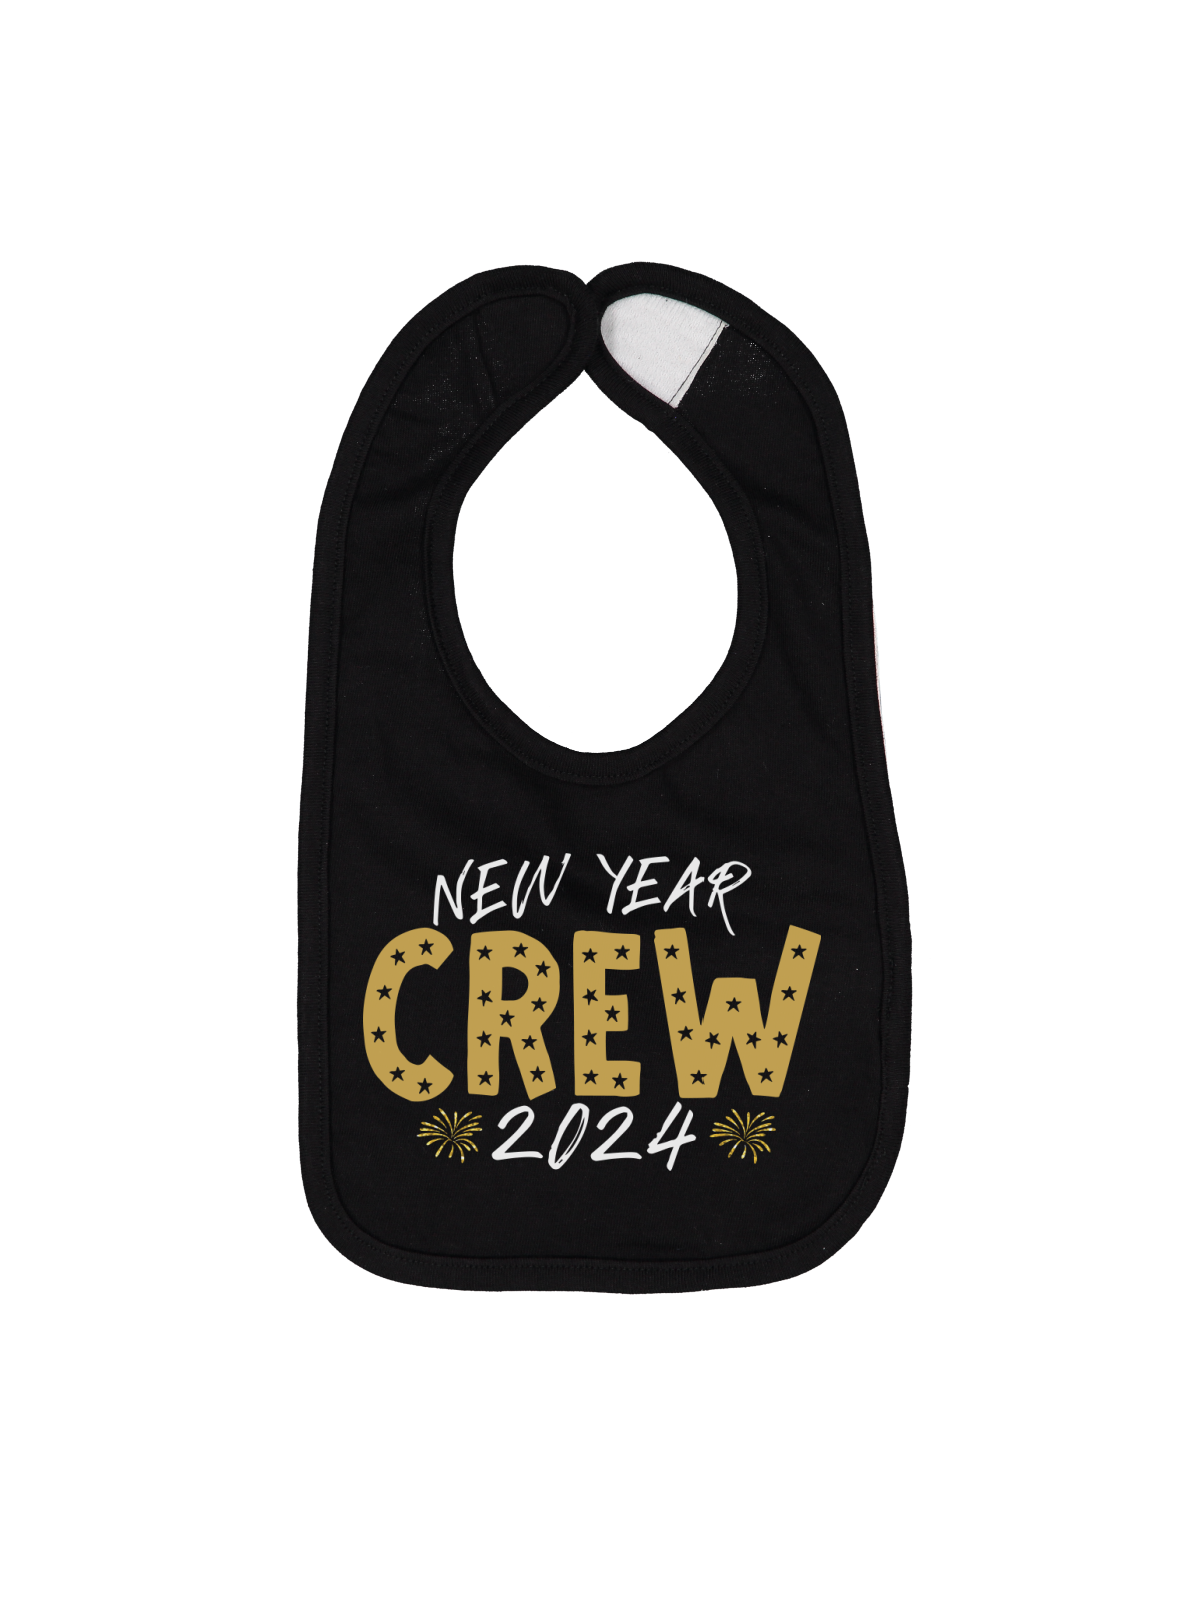 New Year Crew 2024 Baby Bib in Black